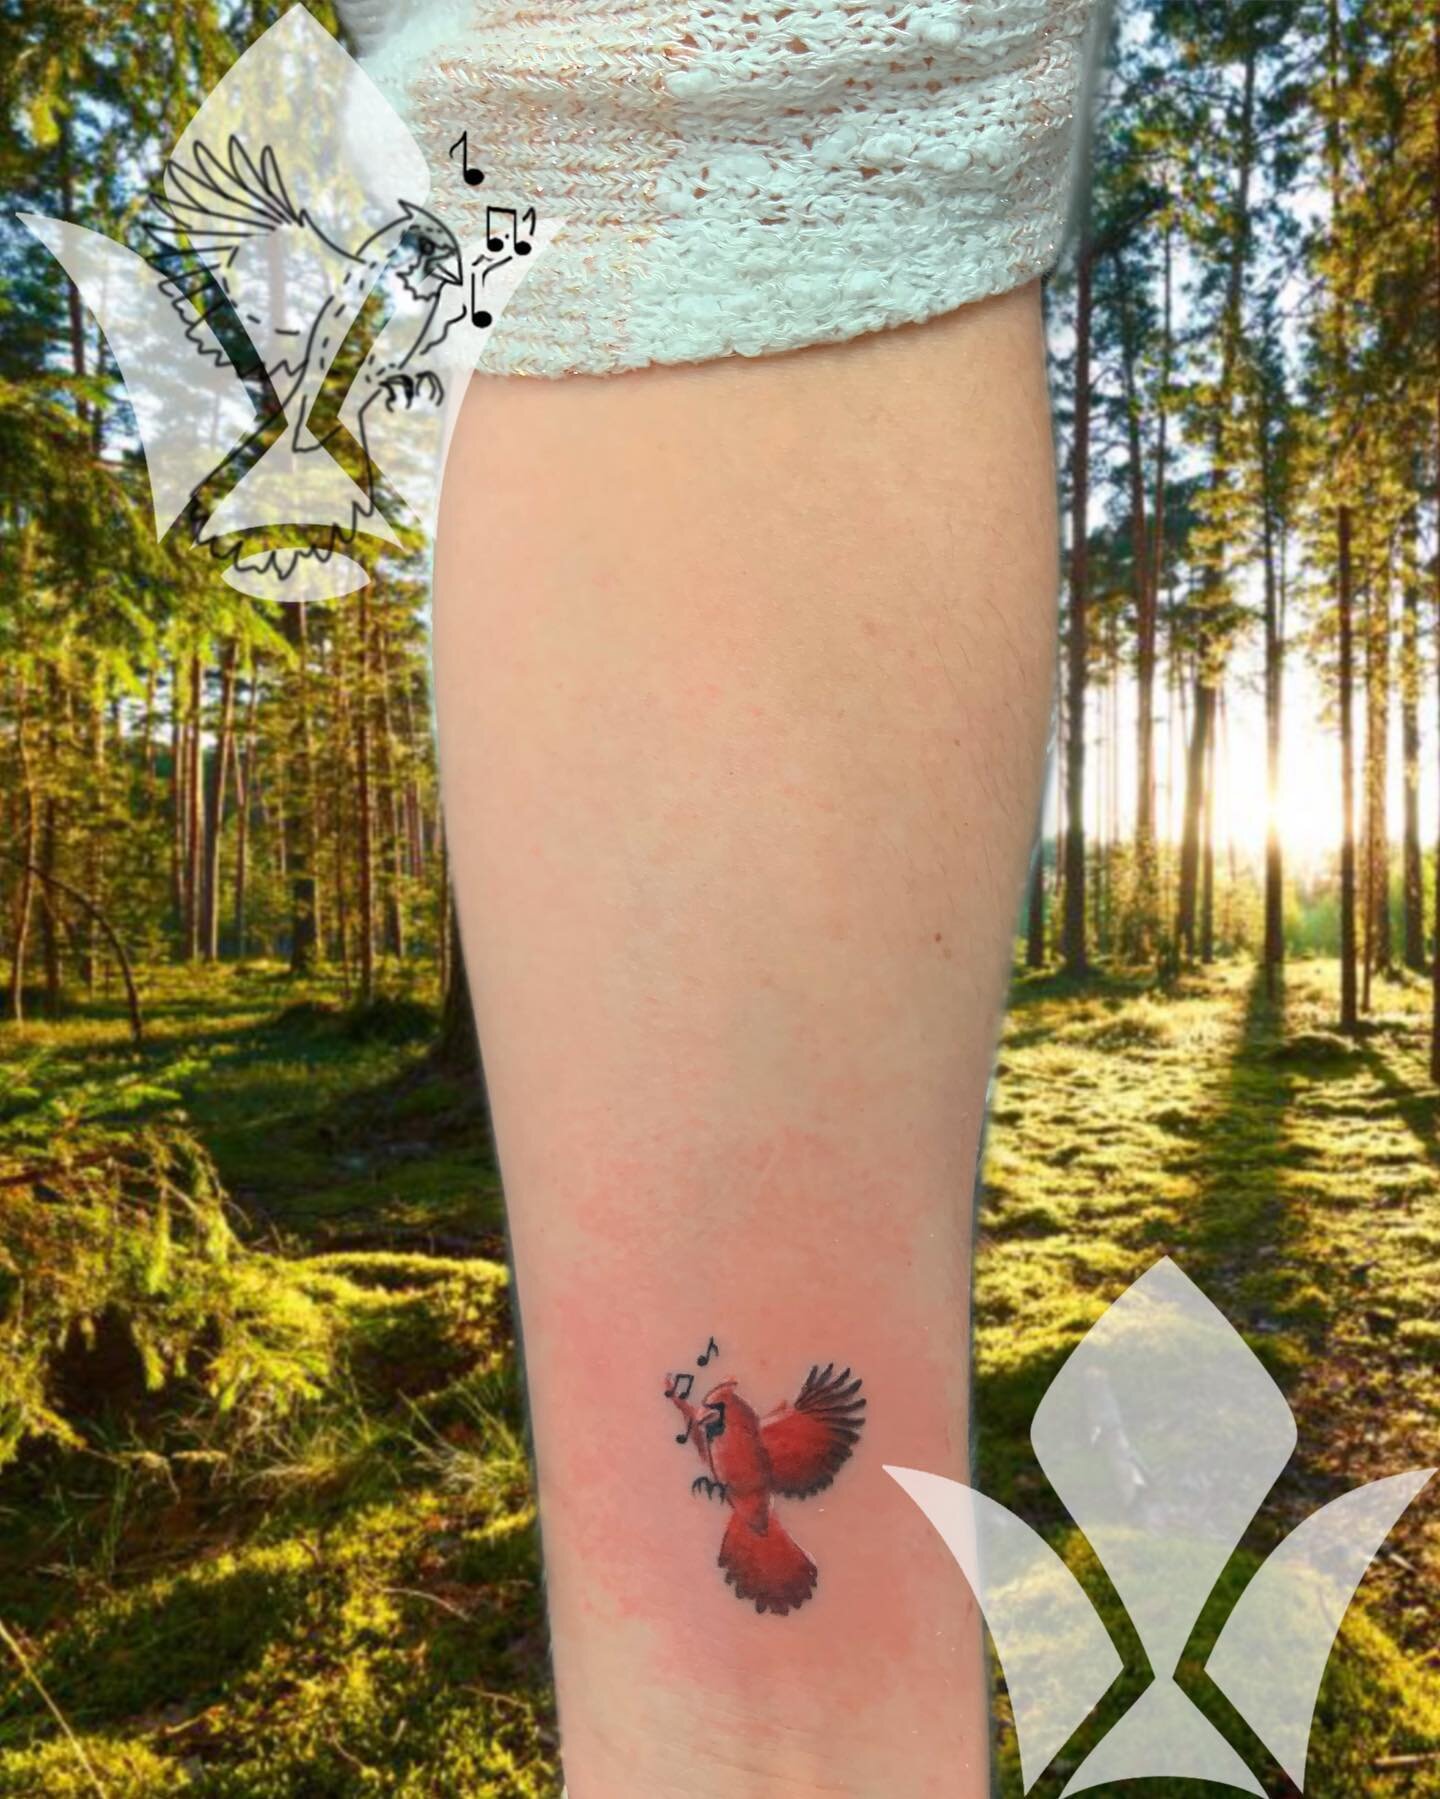 Tiny cardinal tattoo by Angelo @thuctau.art 
#theedgetattoo #theedgetattooct #southWindsor #manchesterct #evergreenwalk #bluebacksquare #cttattooartists #tattoos #tattooing #tattoo #art #ccsu #ecsu #tat #northeasterntattooers #203&nbsp; #860 #Connect